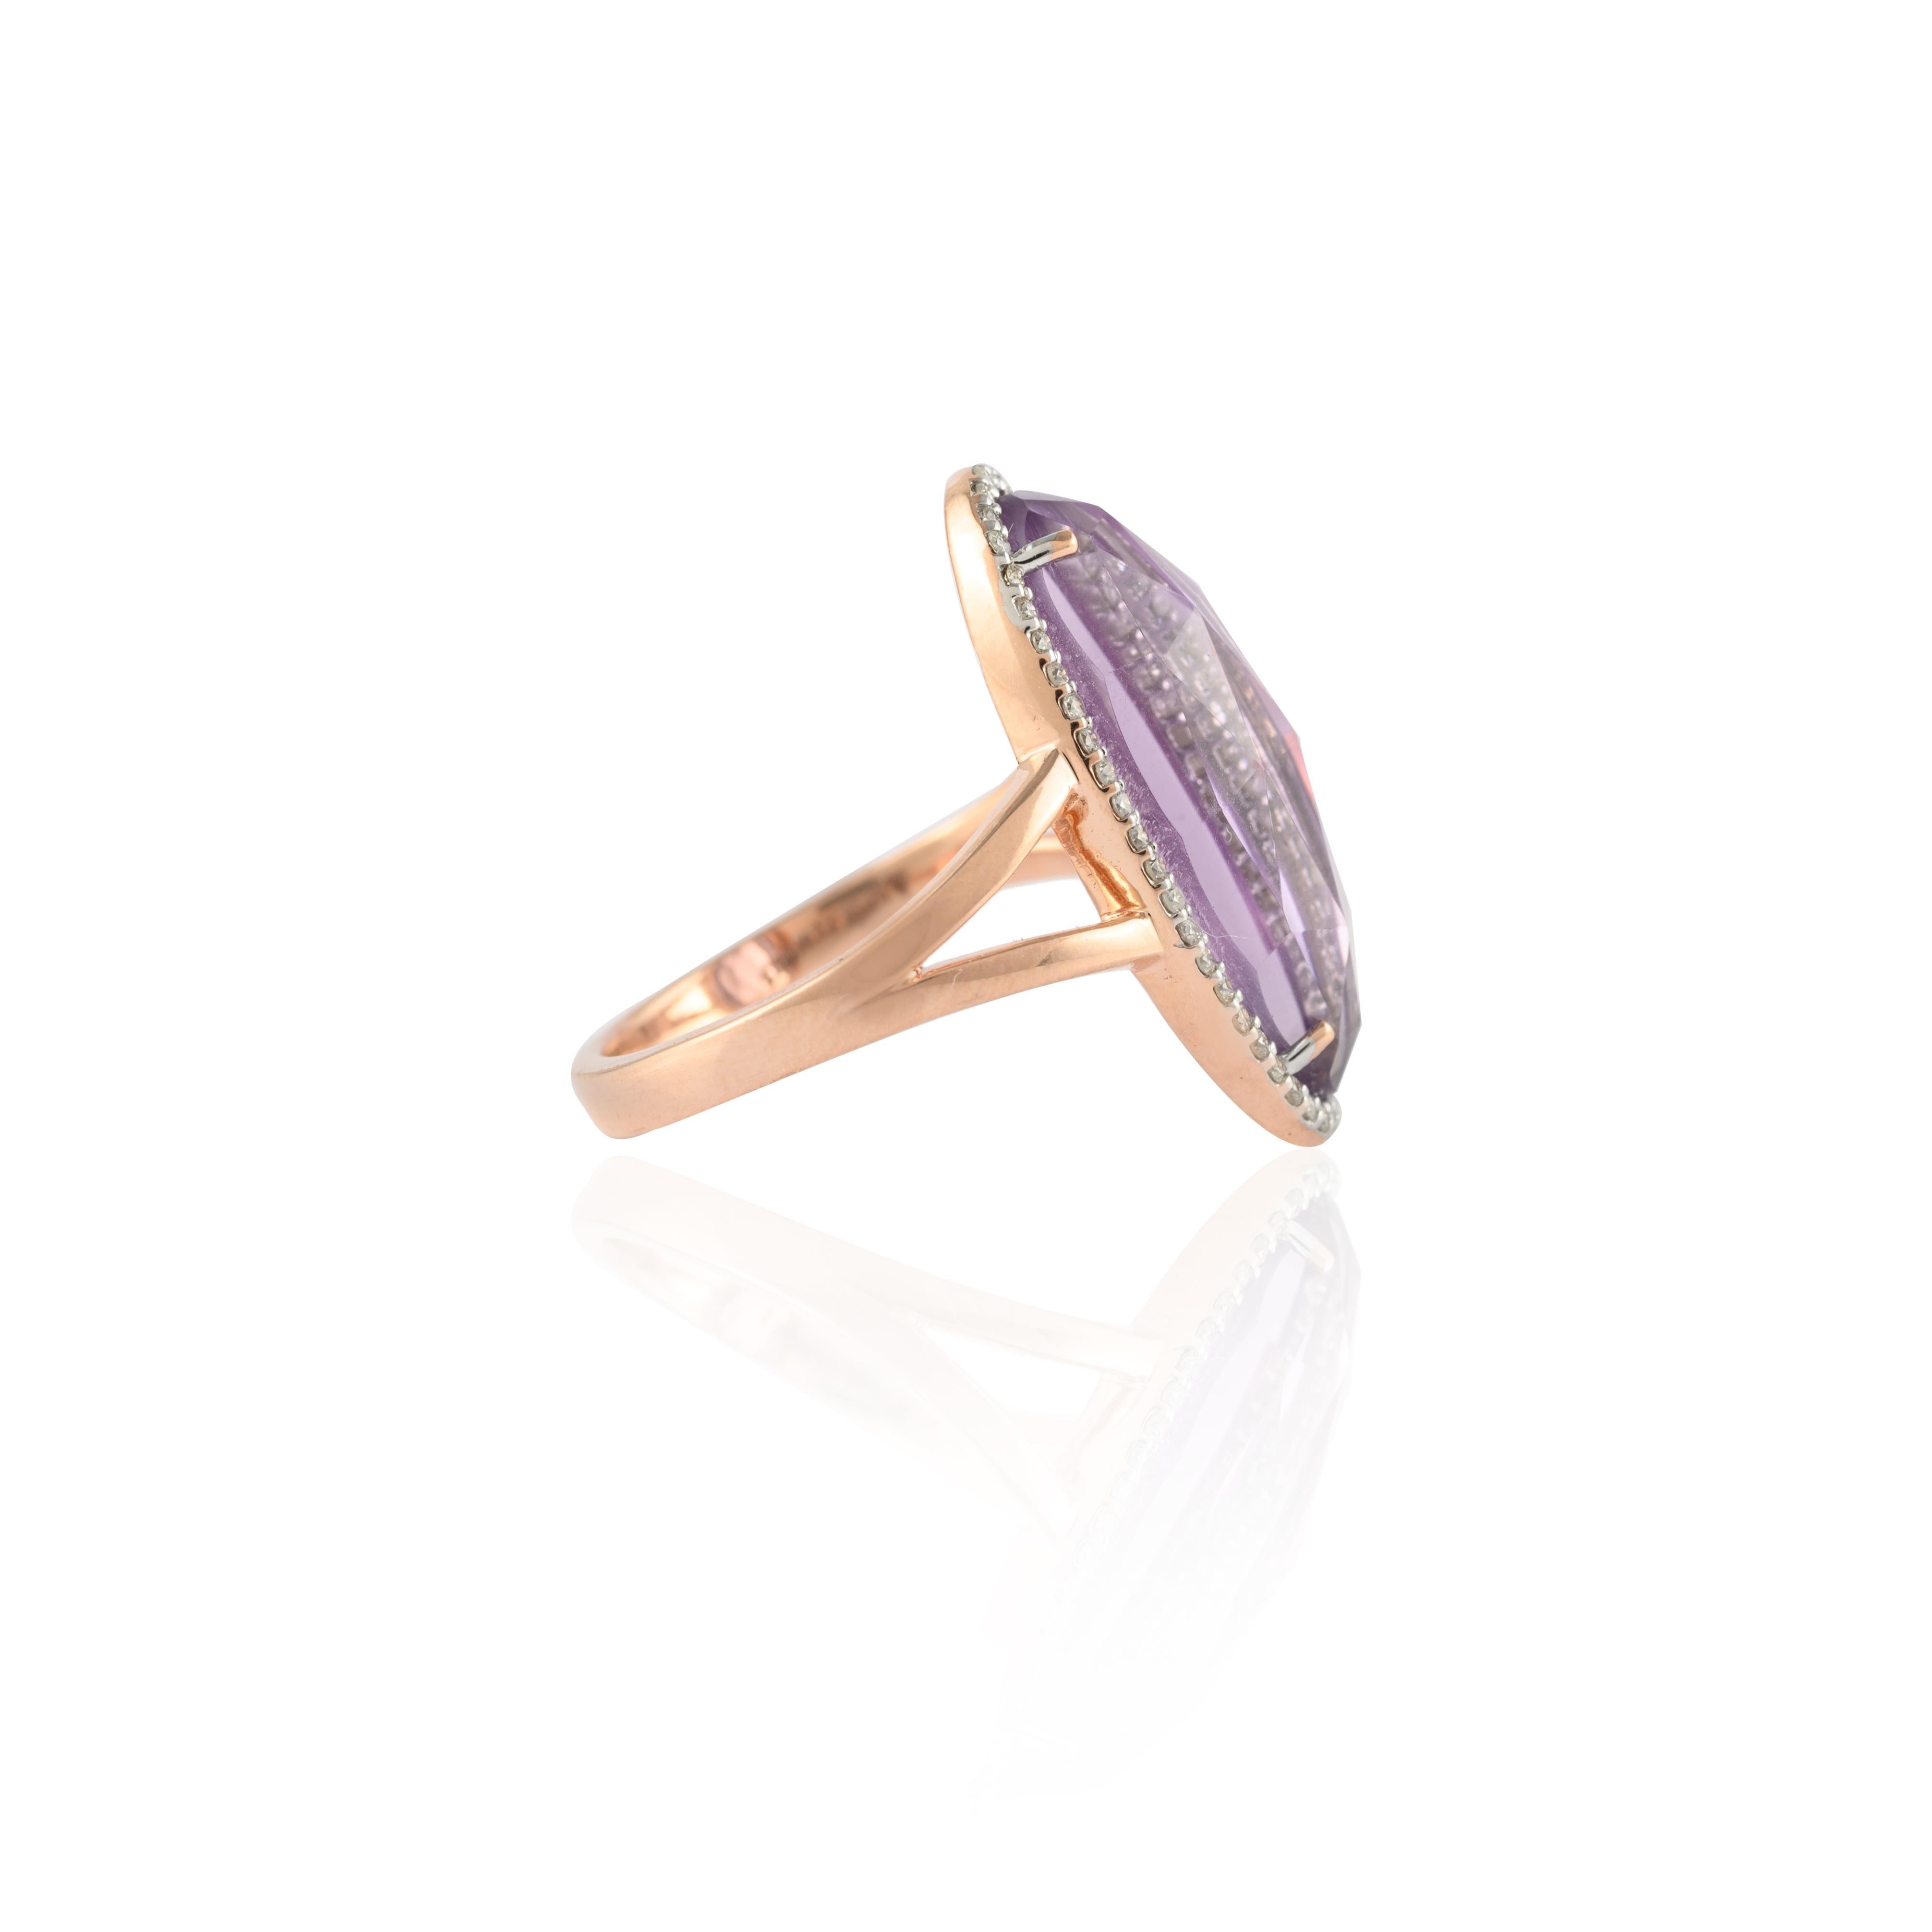 For Sale:  Statement 5.73 Carat Amethyst Diamond Ring 14 Karat Solid Rose Gold 6